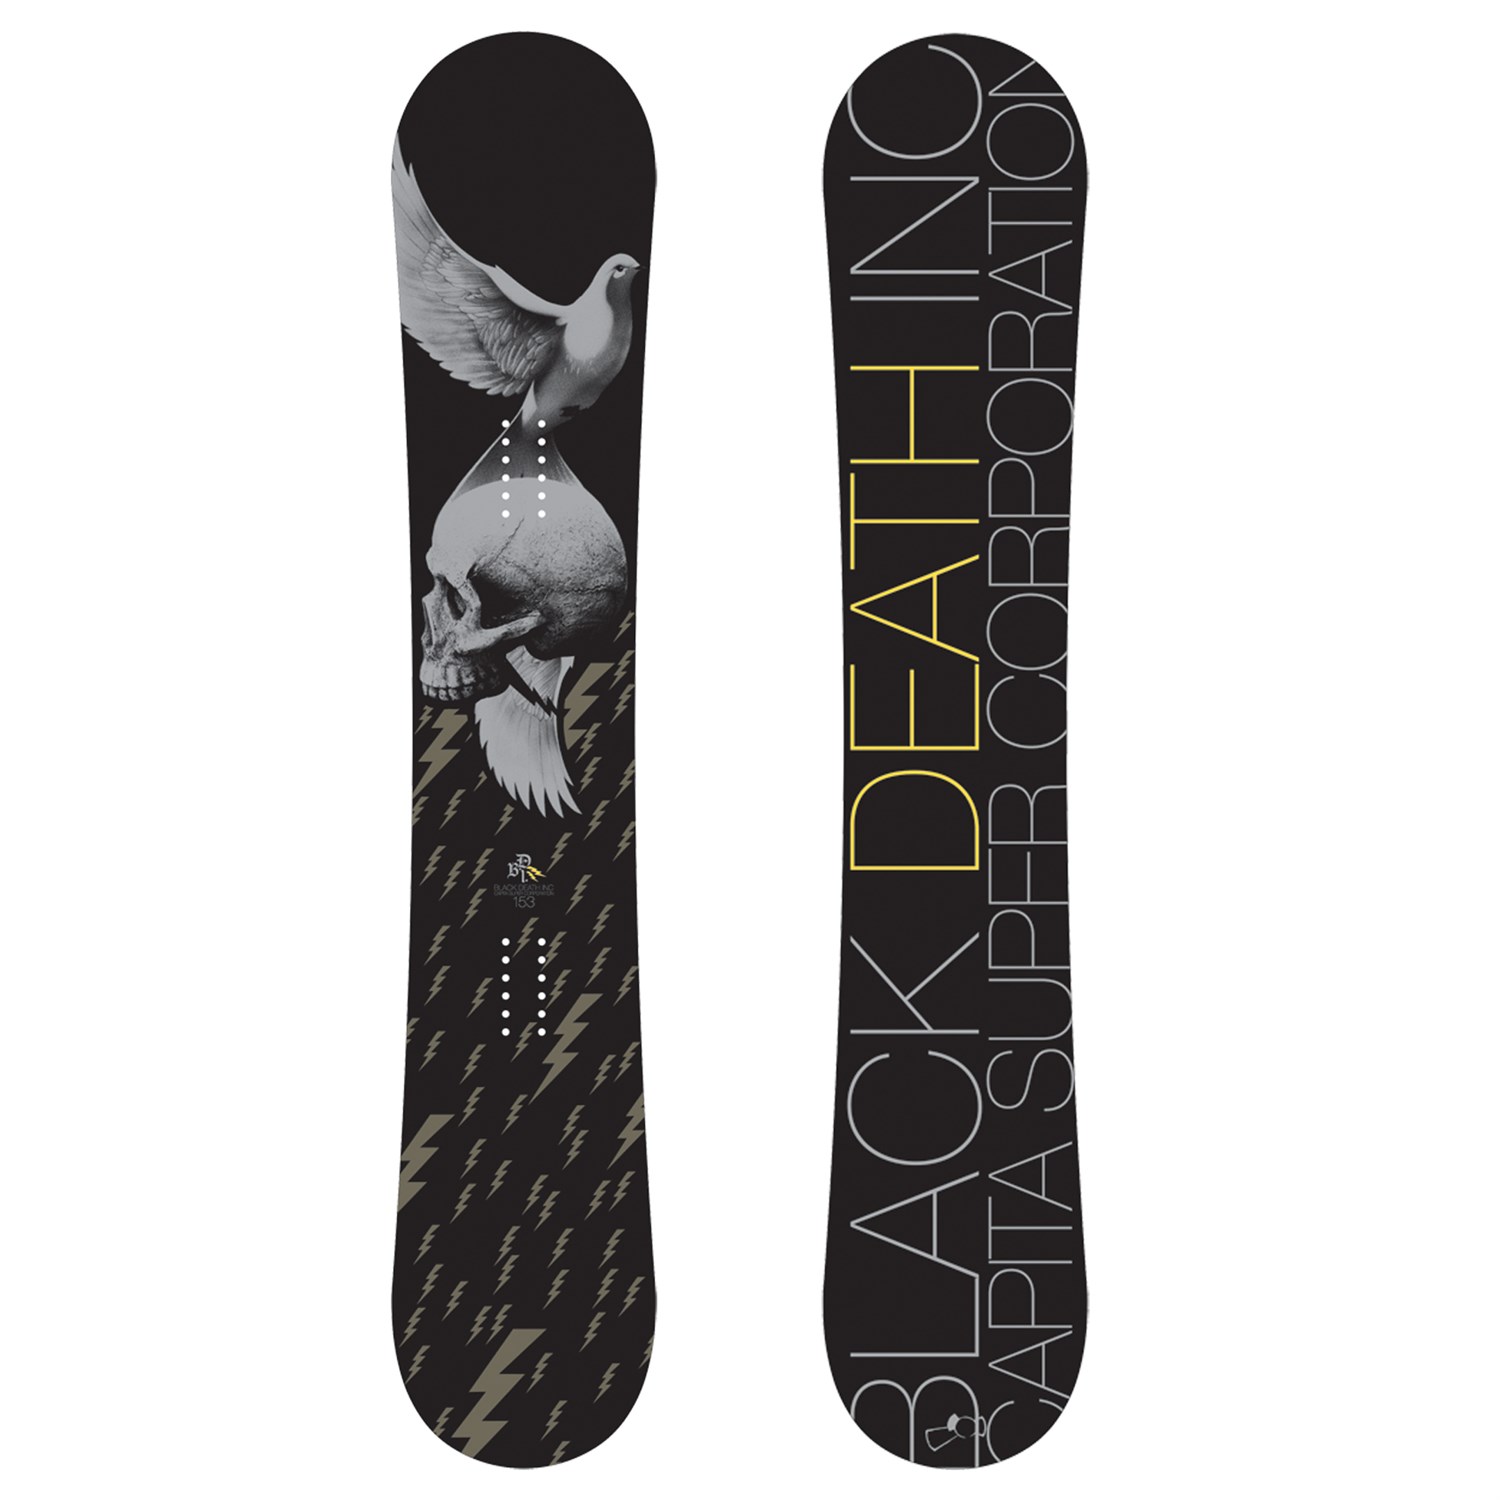 CAPiTA Black Death Inc. Snowboard 2009 | evo